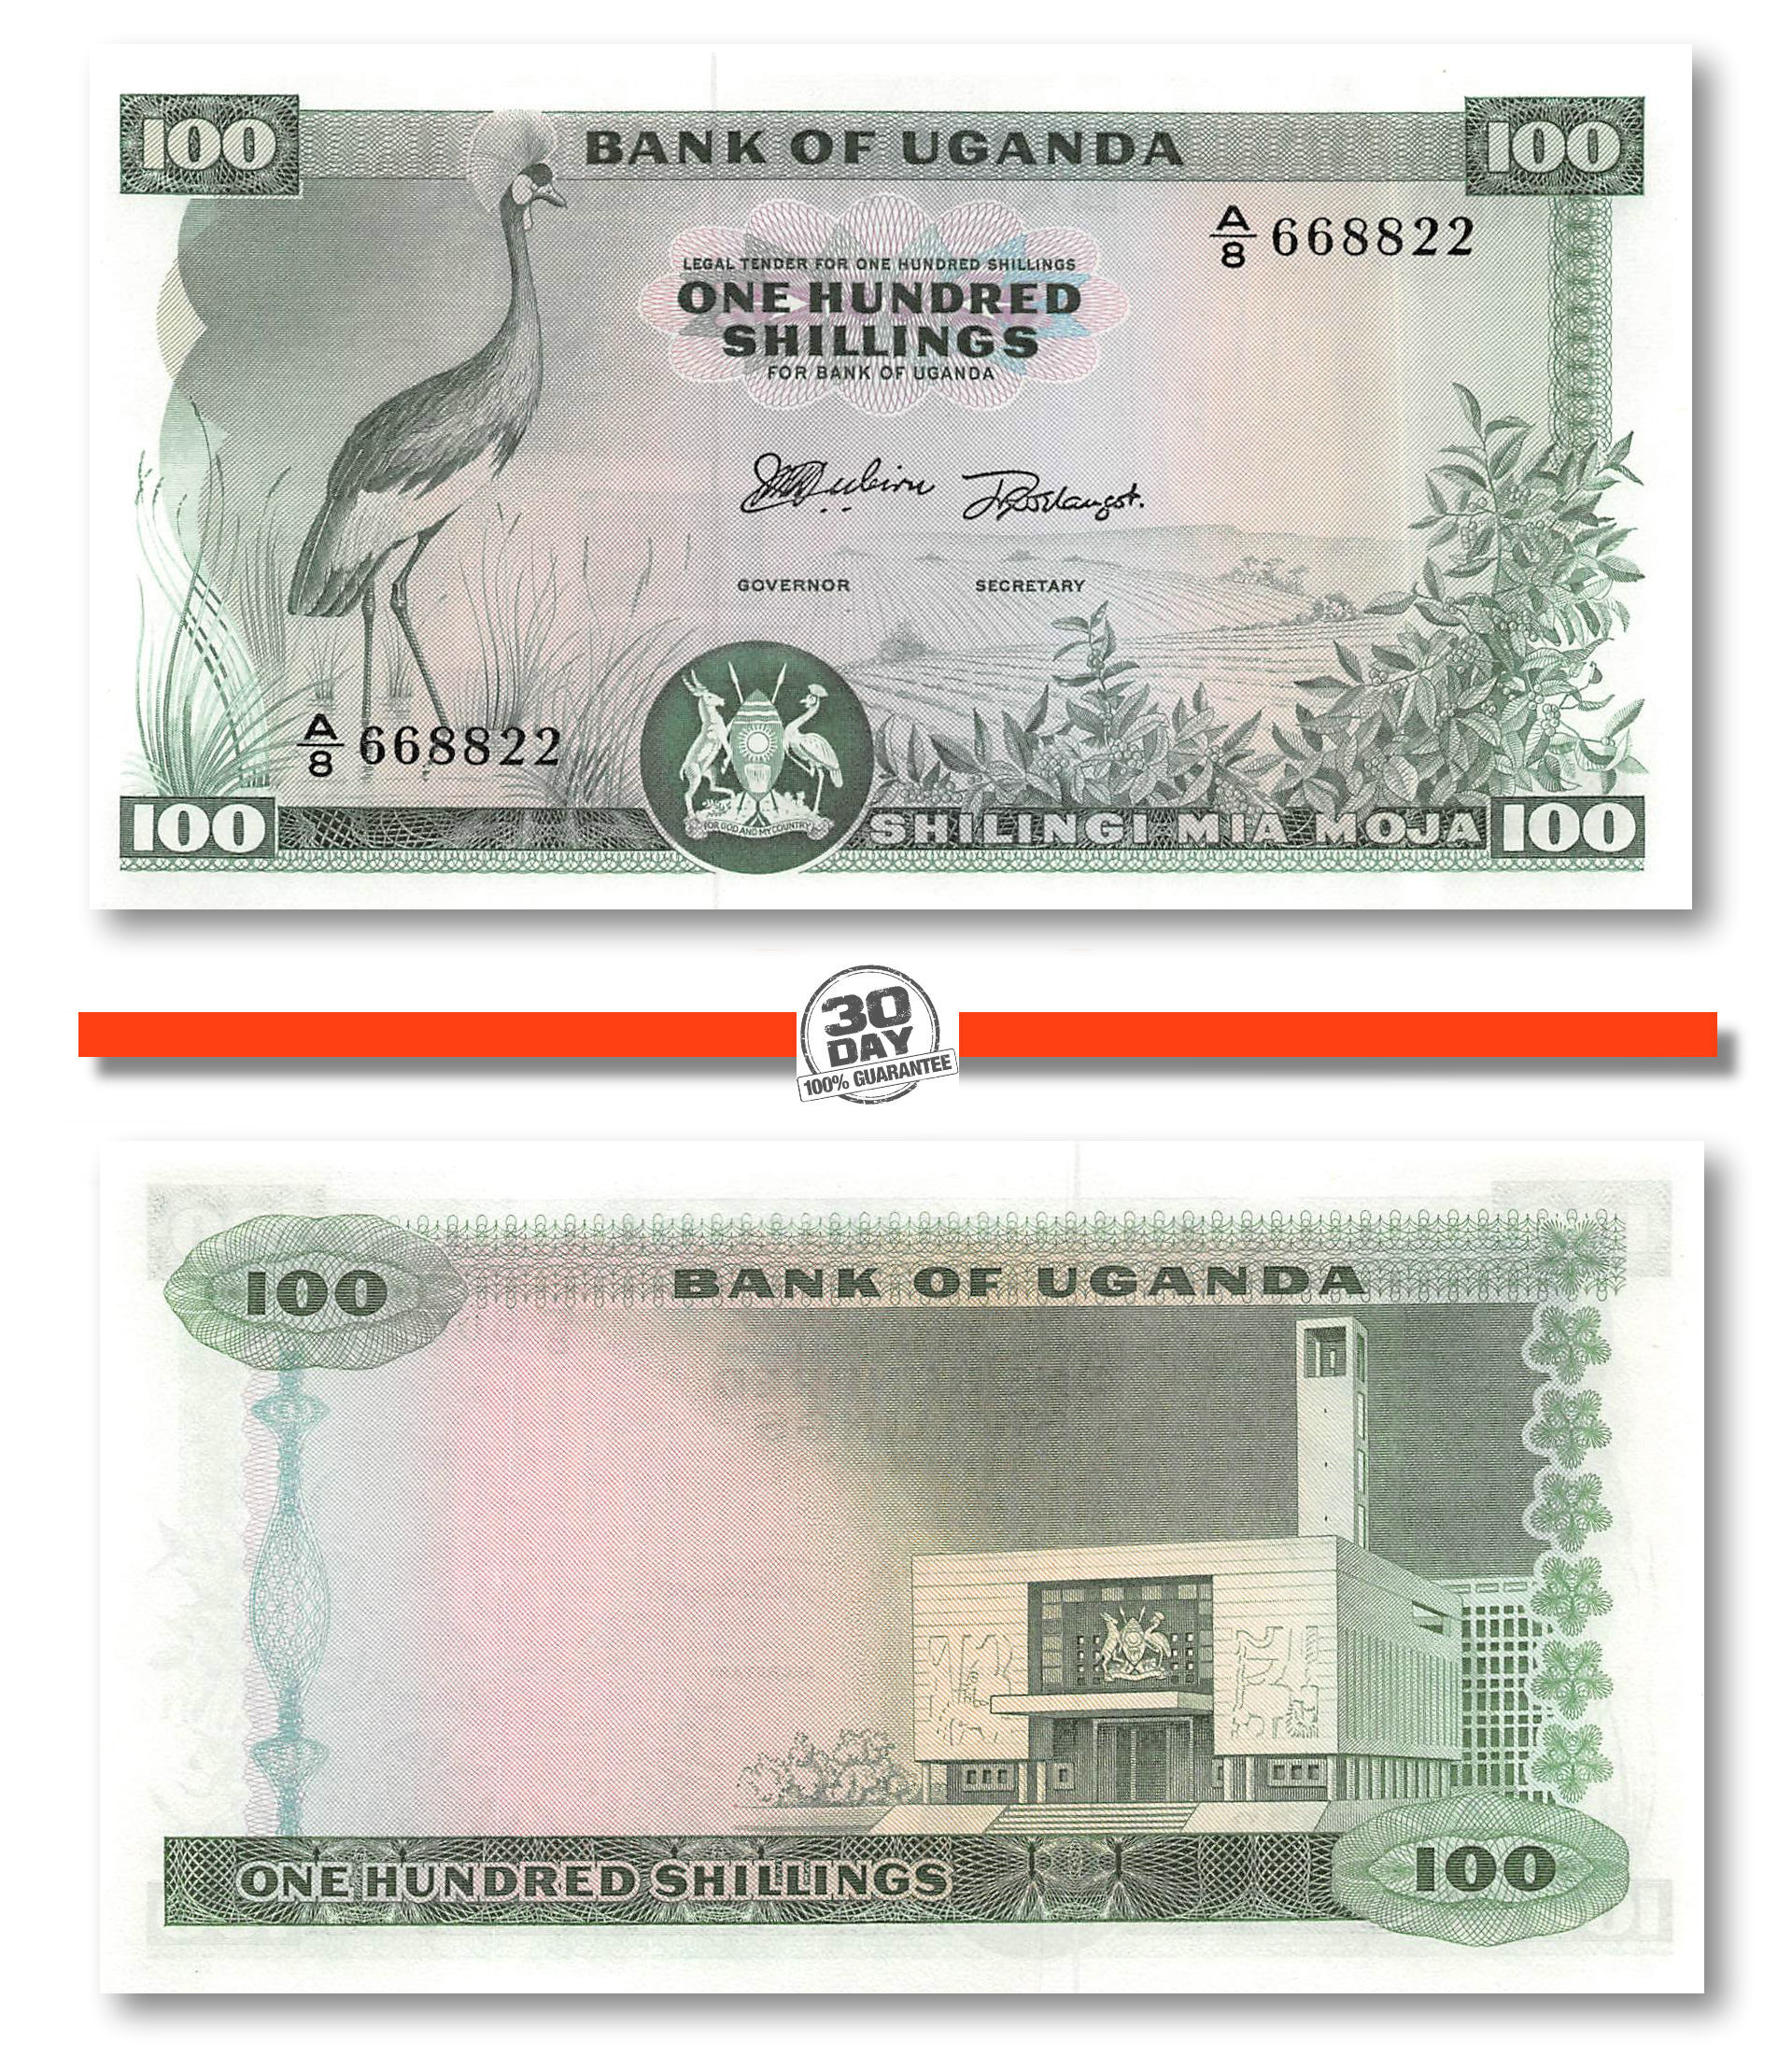 Tanzania Paper Money 1000 Shillings 1993 UNC